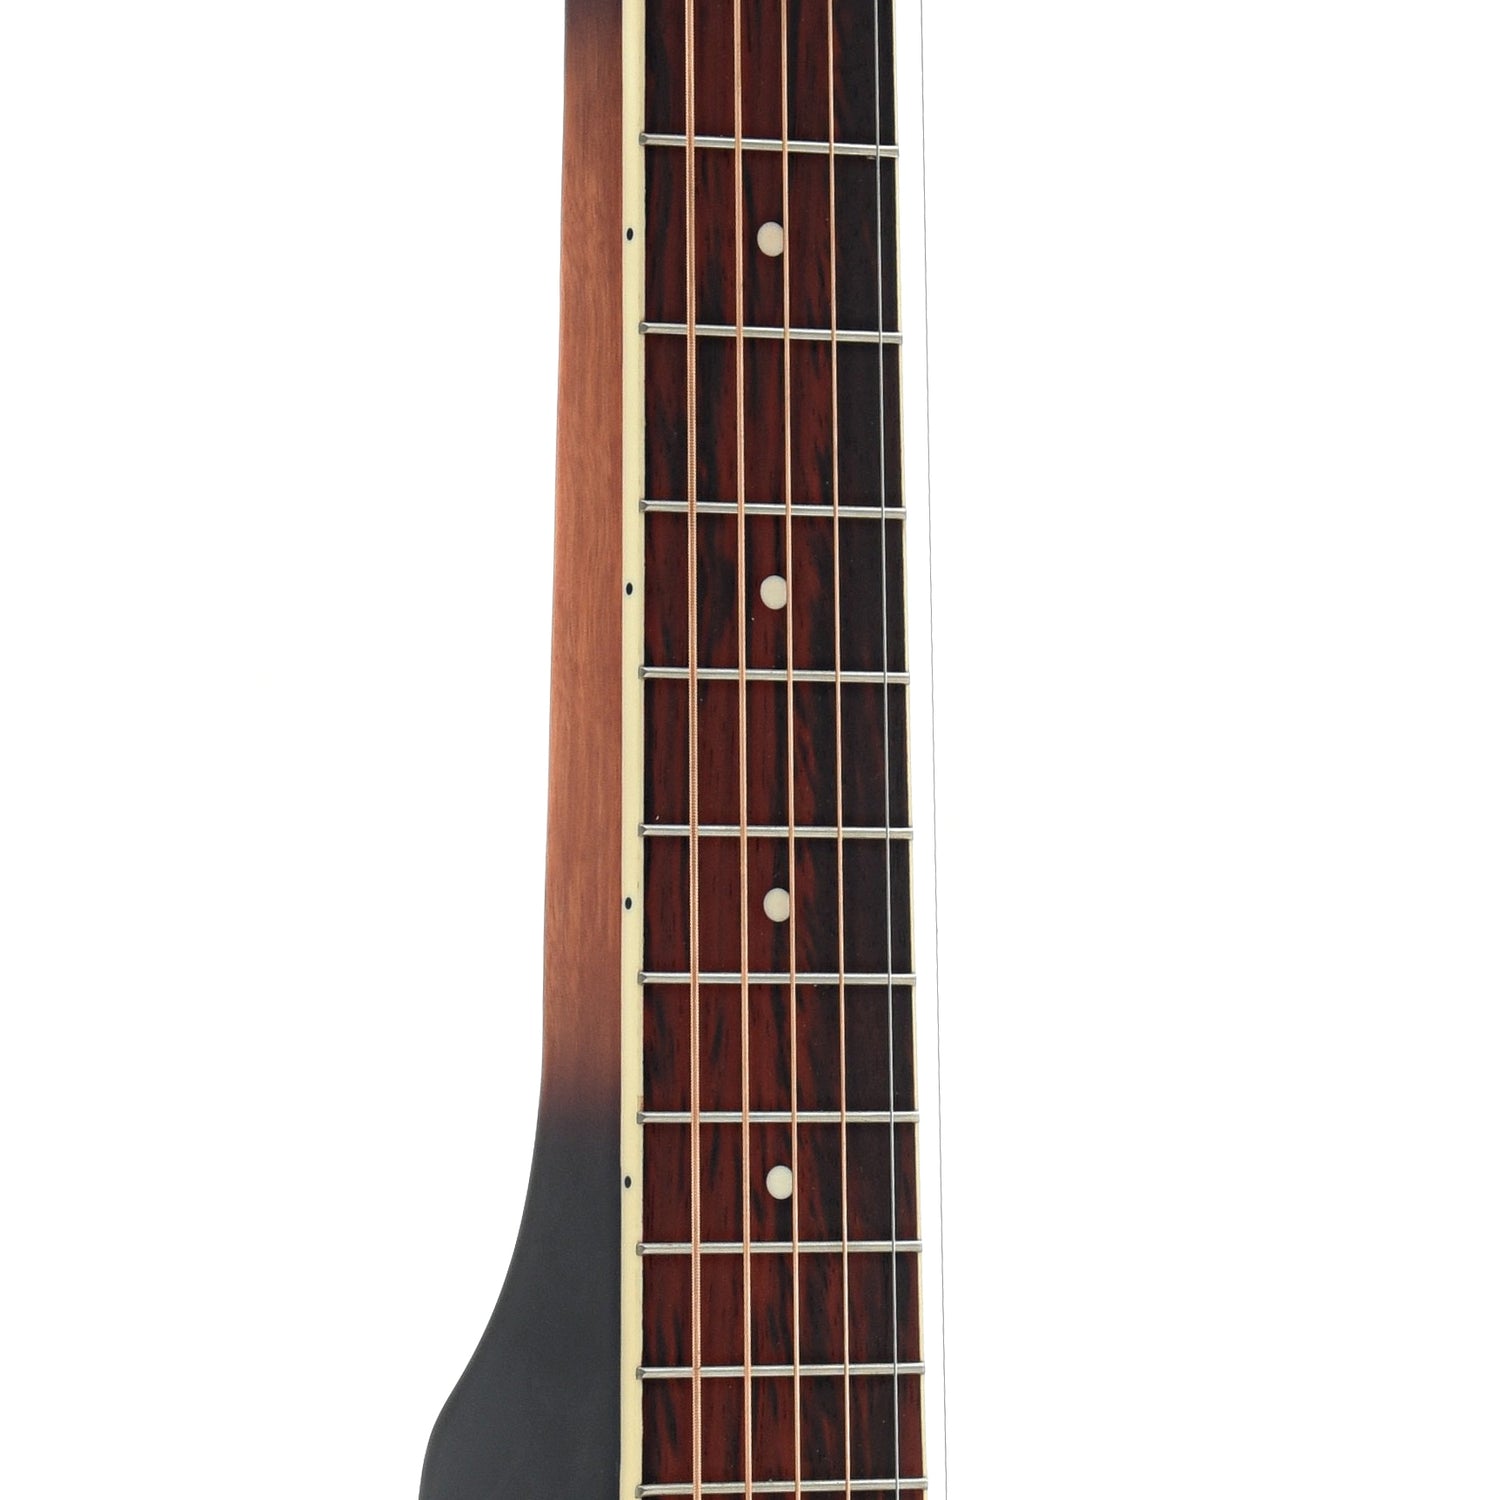 Fretboard of Gretsch Ampli-Sonic G9230 Bobtail Deluxe Squareneck Resonator Guitar